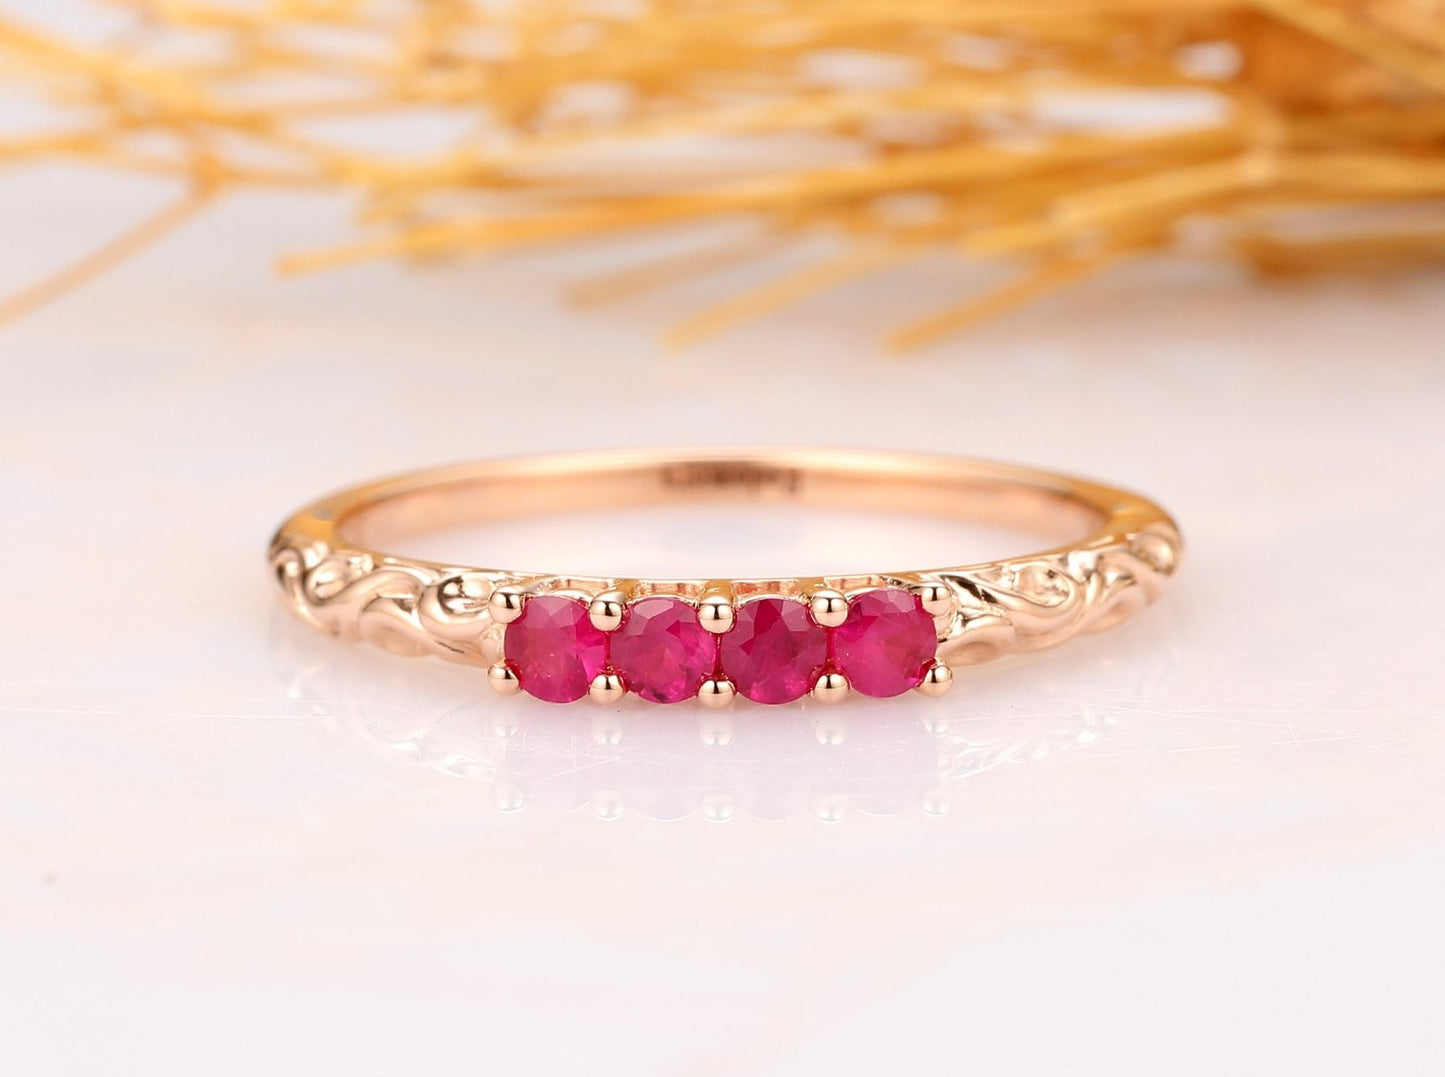 Natural Red Ruby Ring, 14k Rose Gold Wedding Band, Real Gemstone Ring